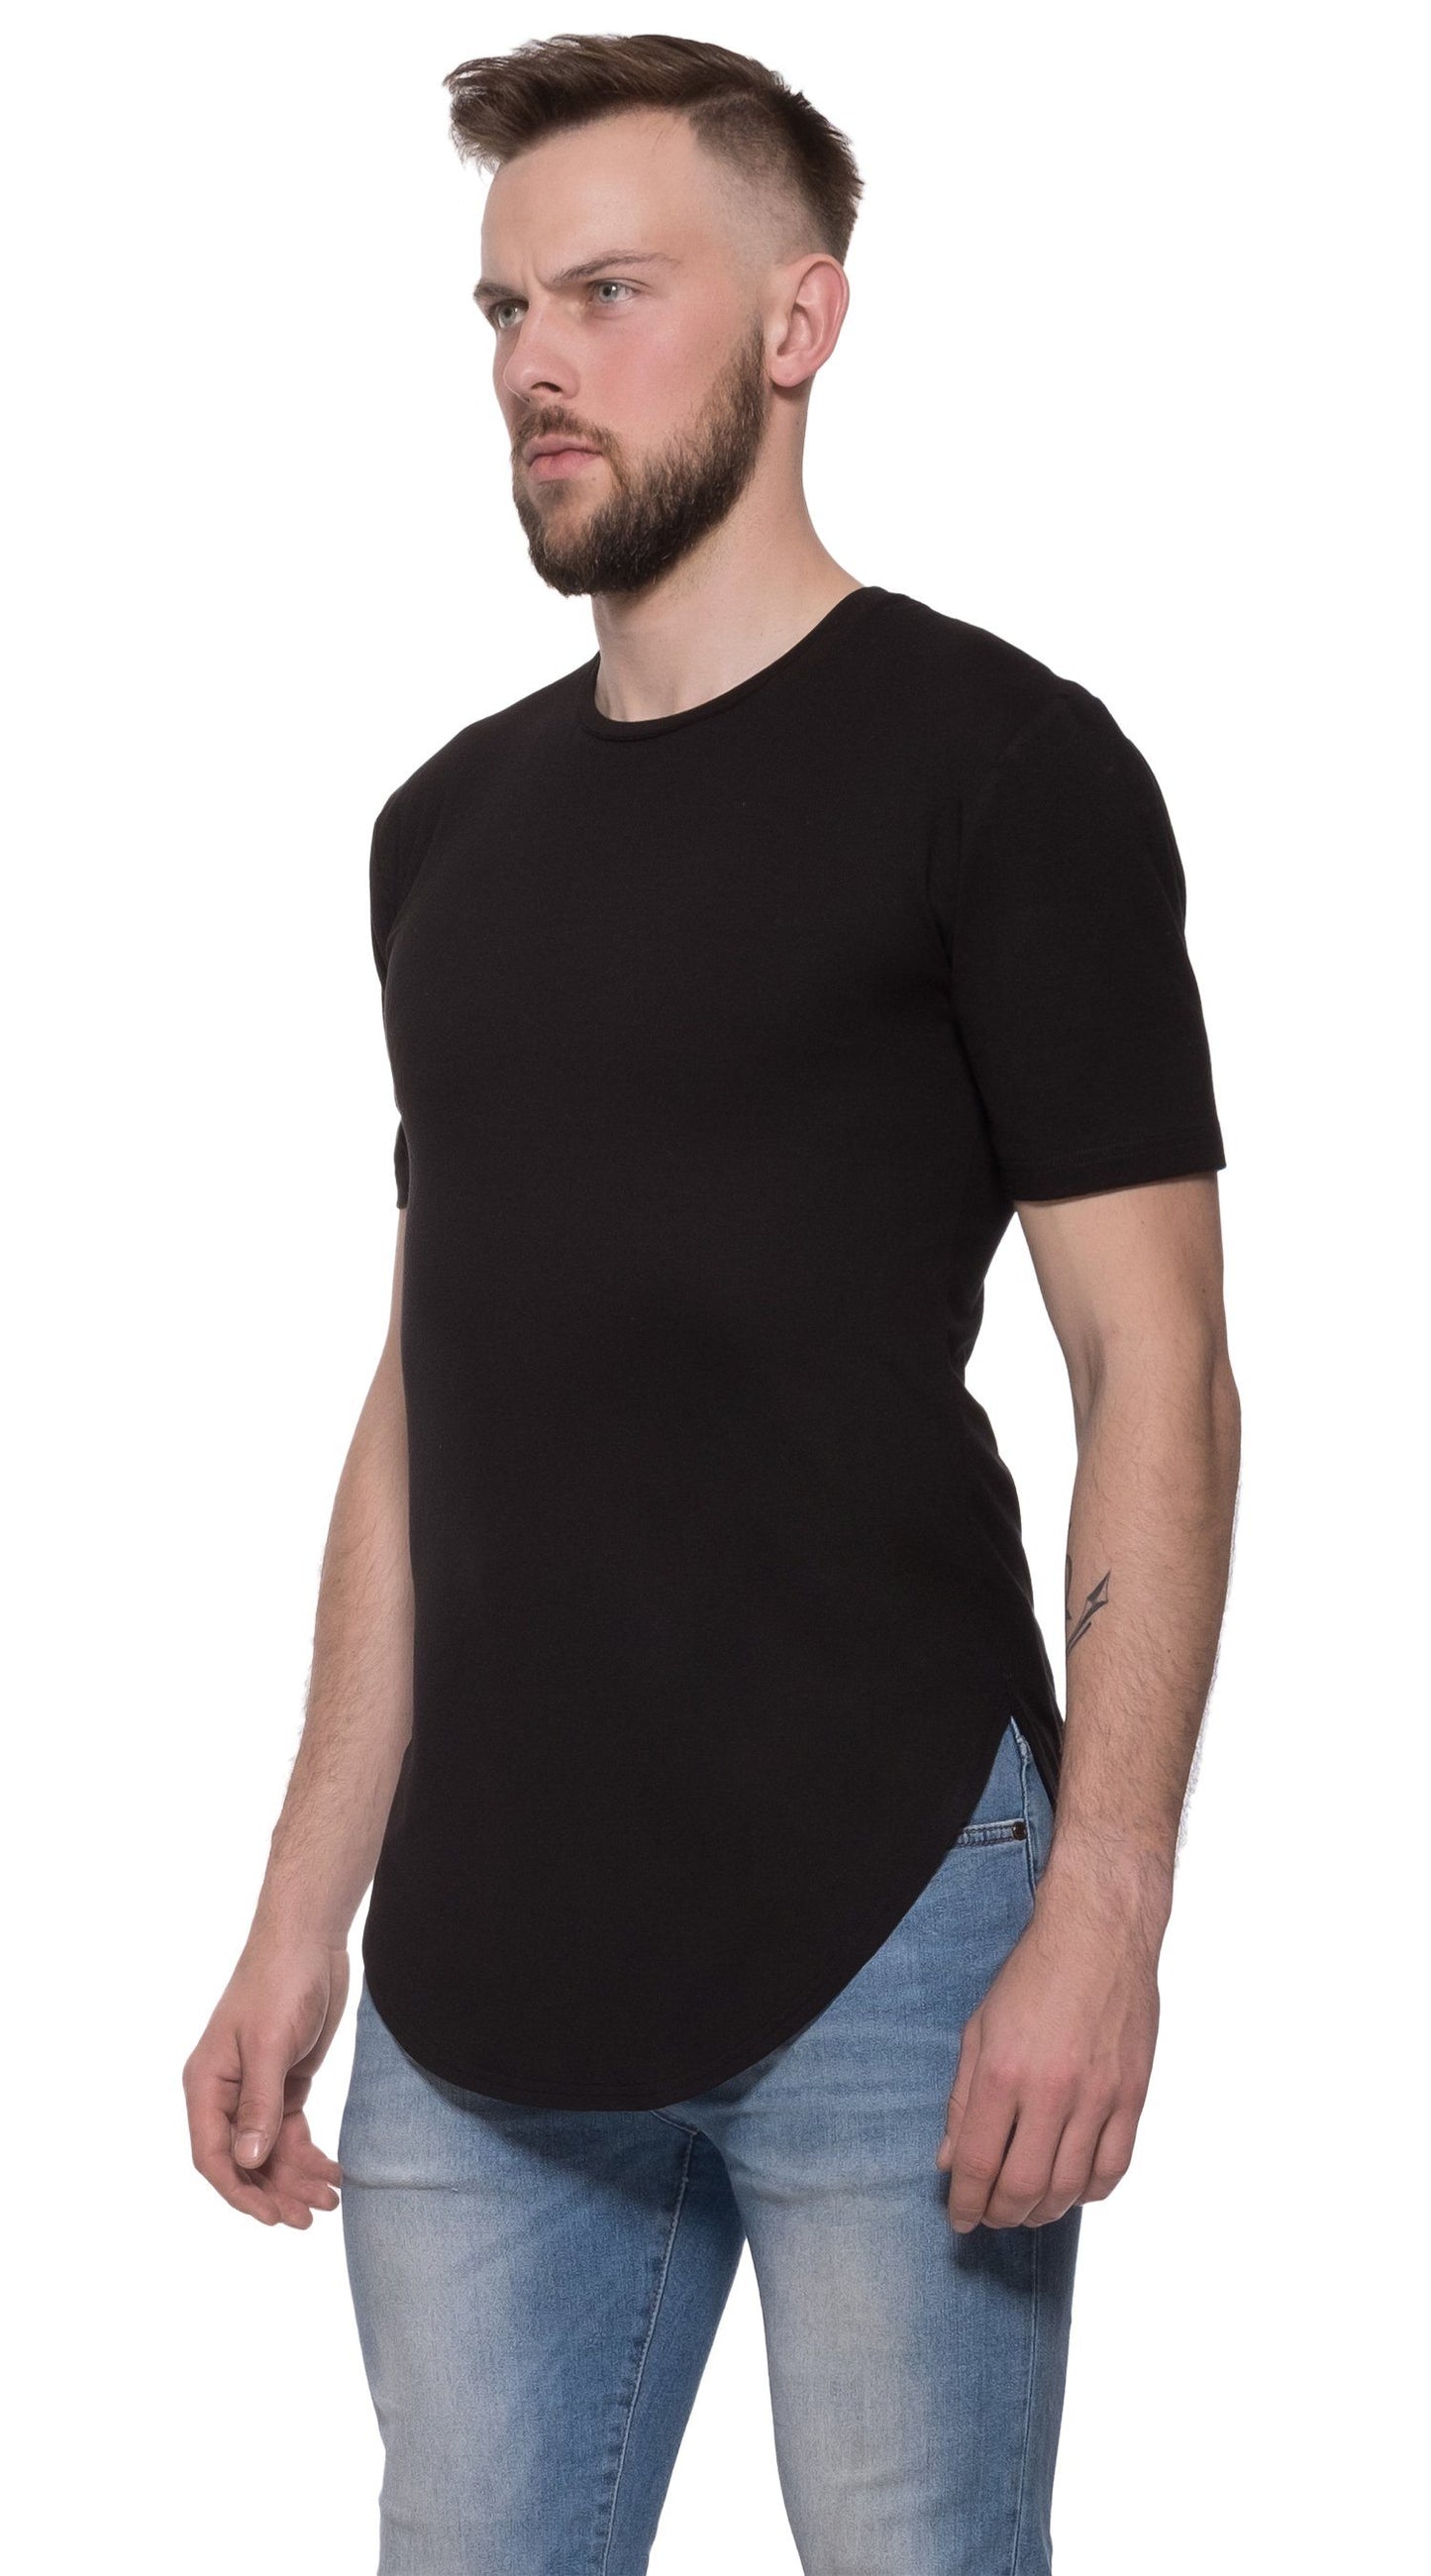 TheG Man viskózové Basic 2/2 dlhé tričko // čierne